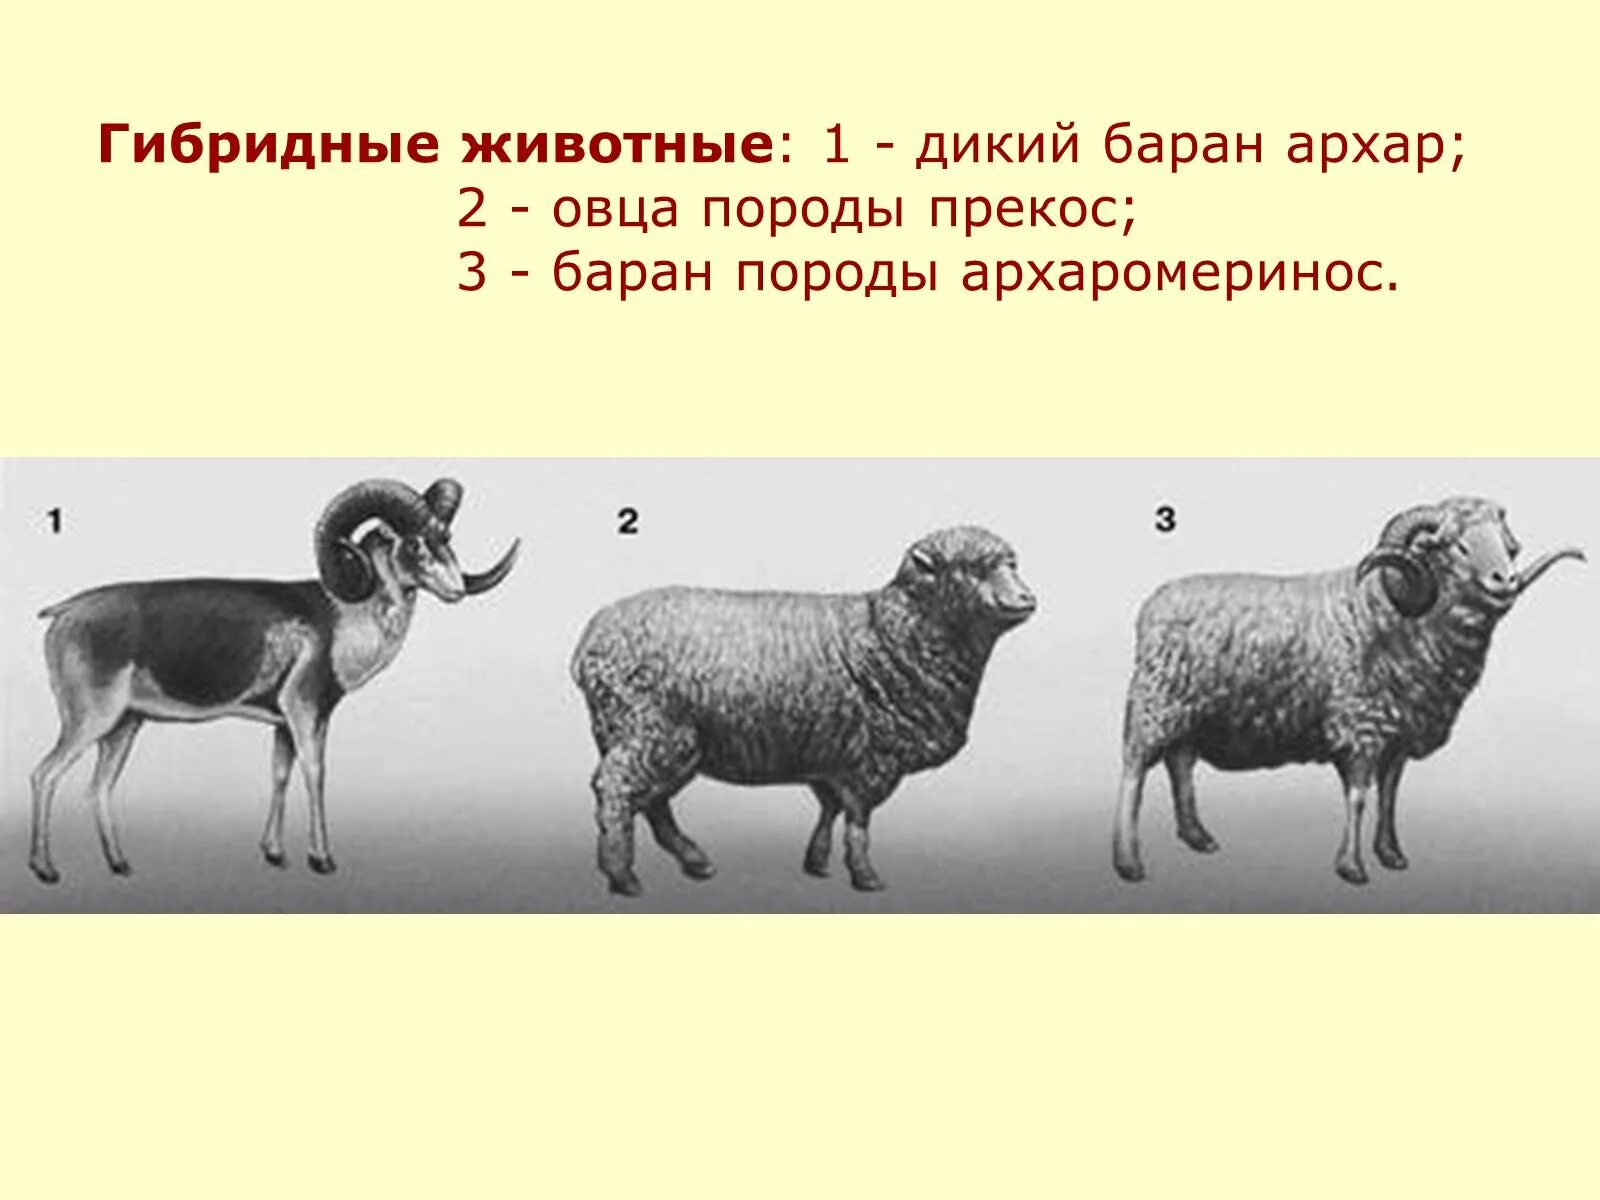 Казахский архаромеринос порода овец. Архаромеринос порода. Дикий баран Архар селекция. Селекция животных.